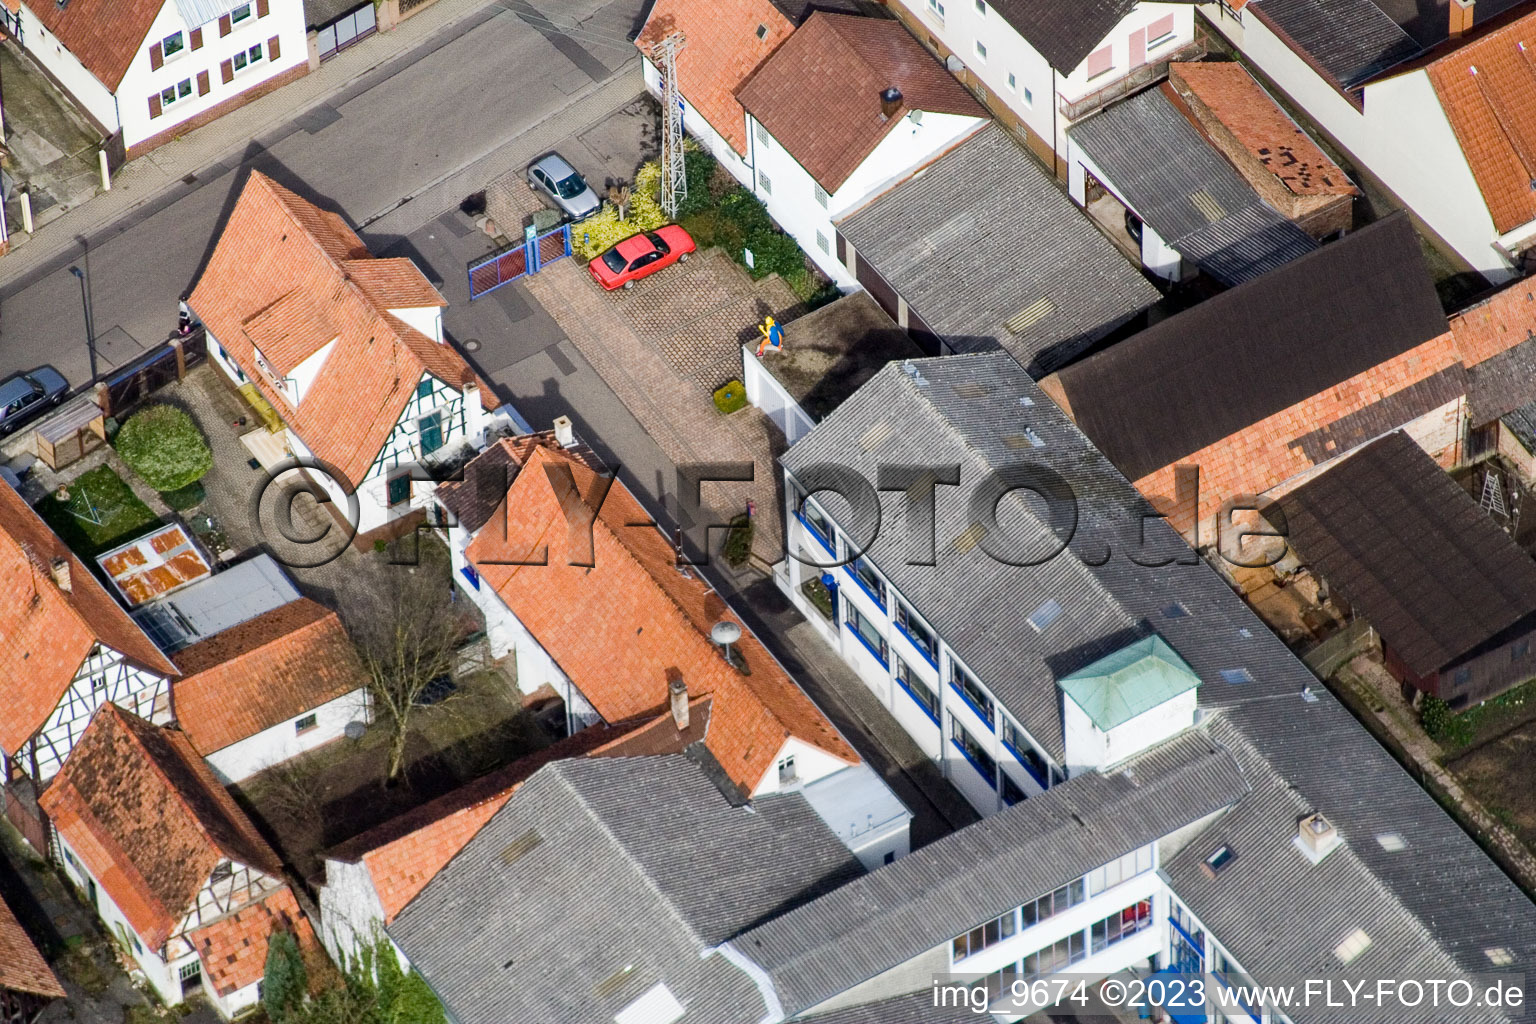 Aerial view of DBK, Rheinstr in Kandel in the state Rhineland-Palatinate, Germany